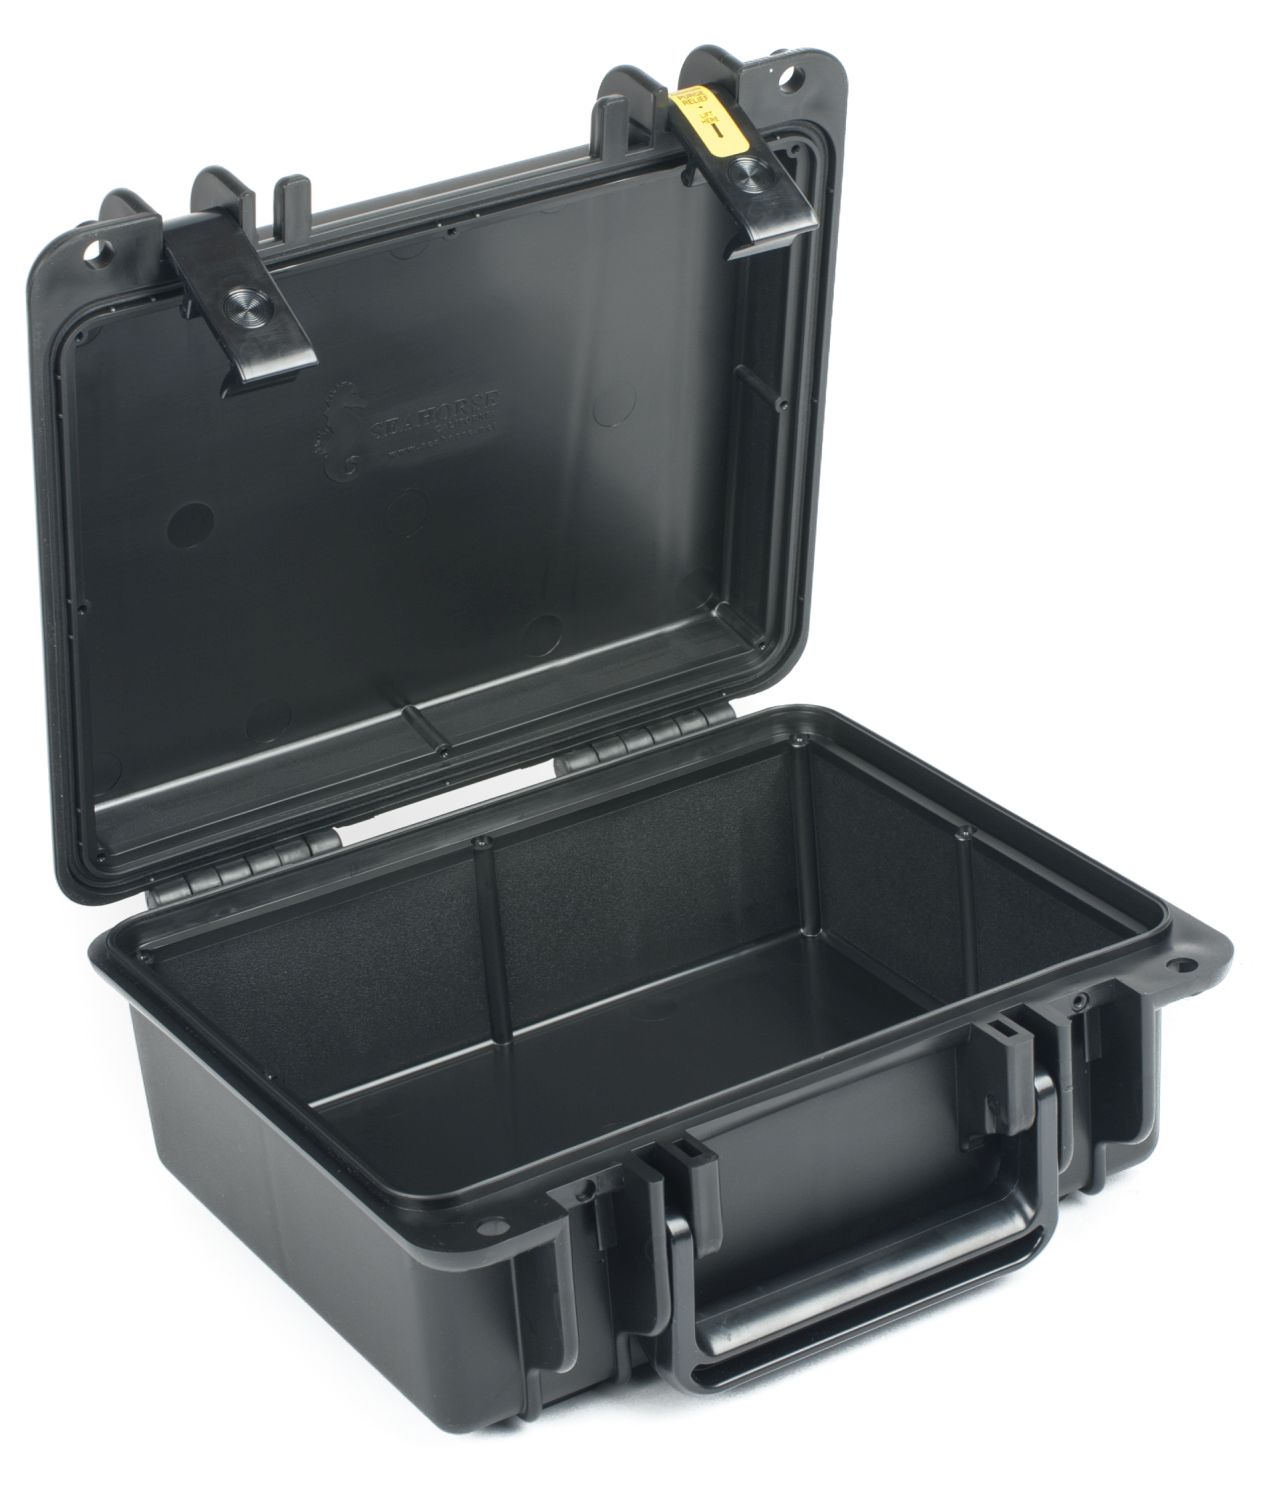 Seahorse SE300 Waterproof Carrying Case, 9.5 x 7.4 x 4.1 - Sierra Cases